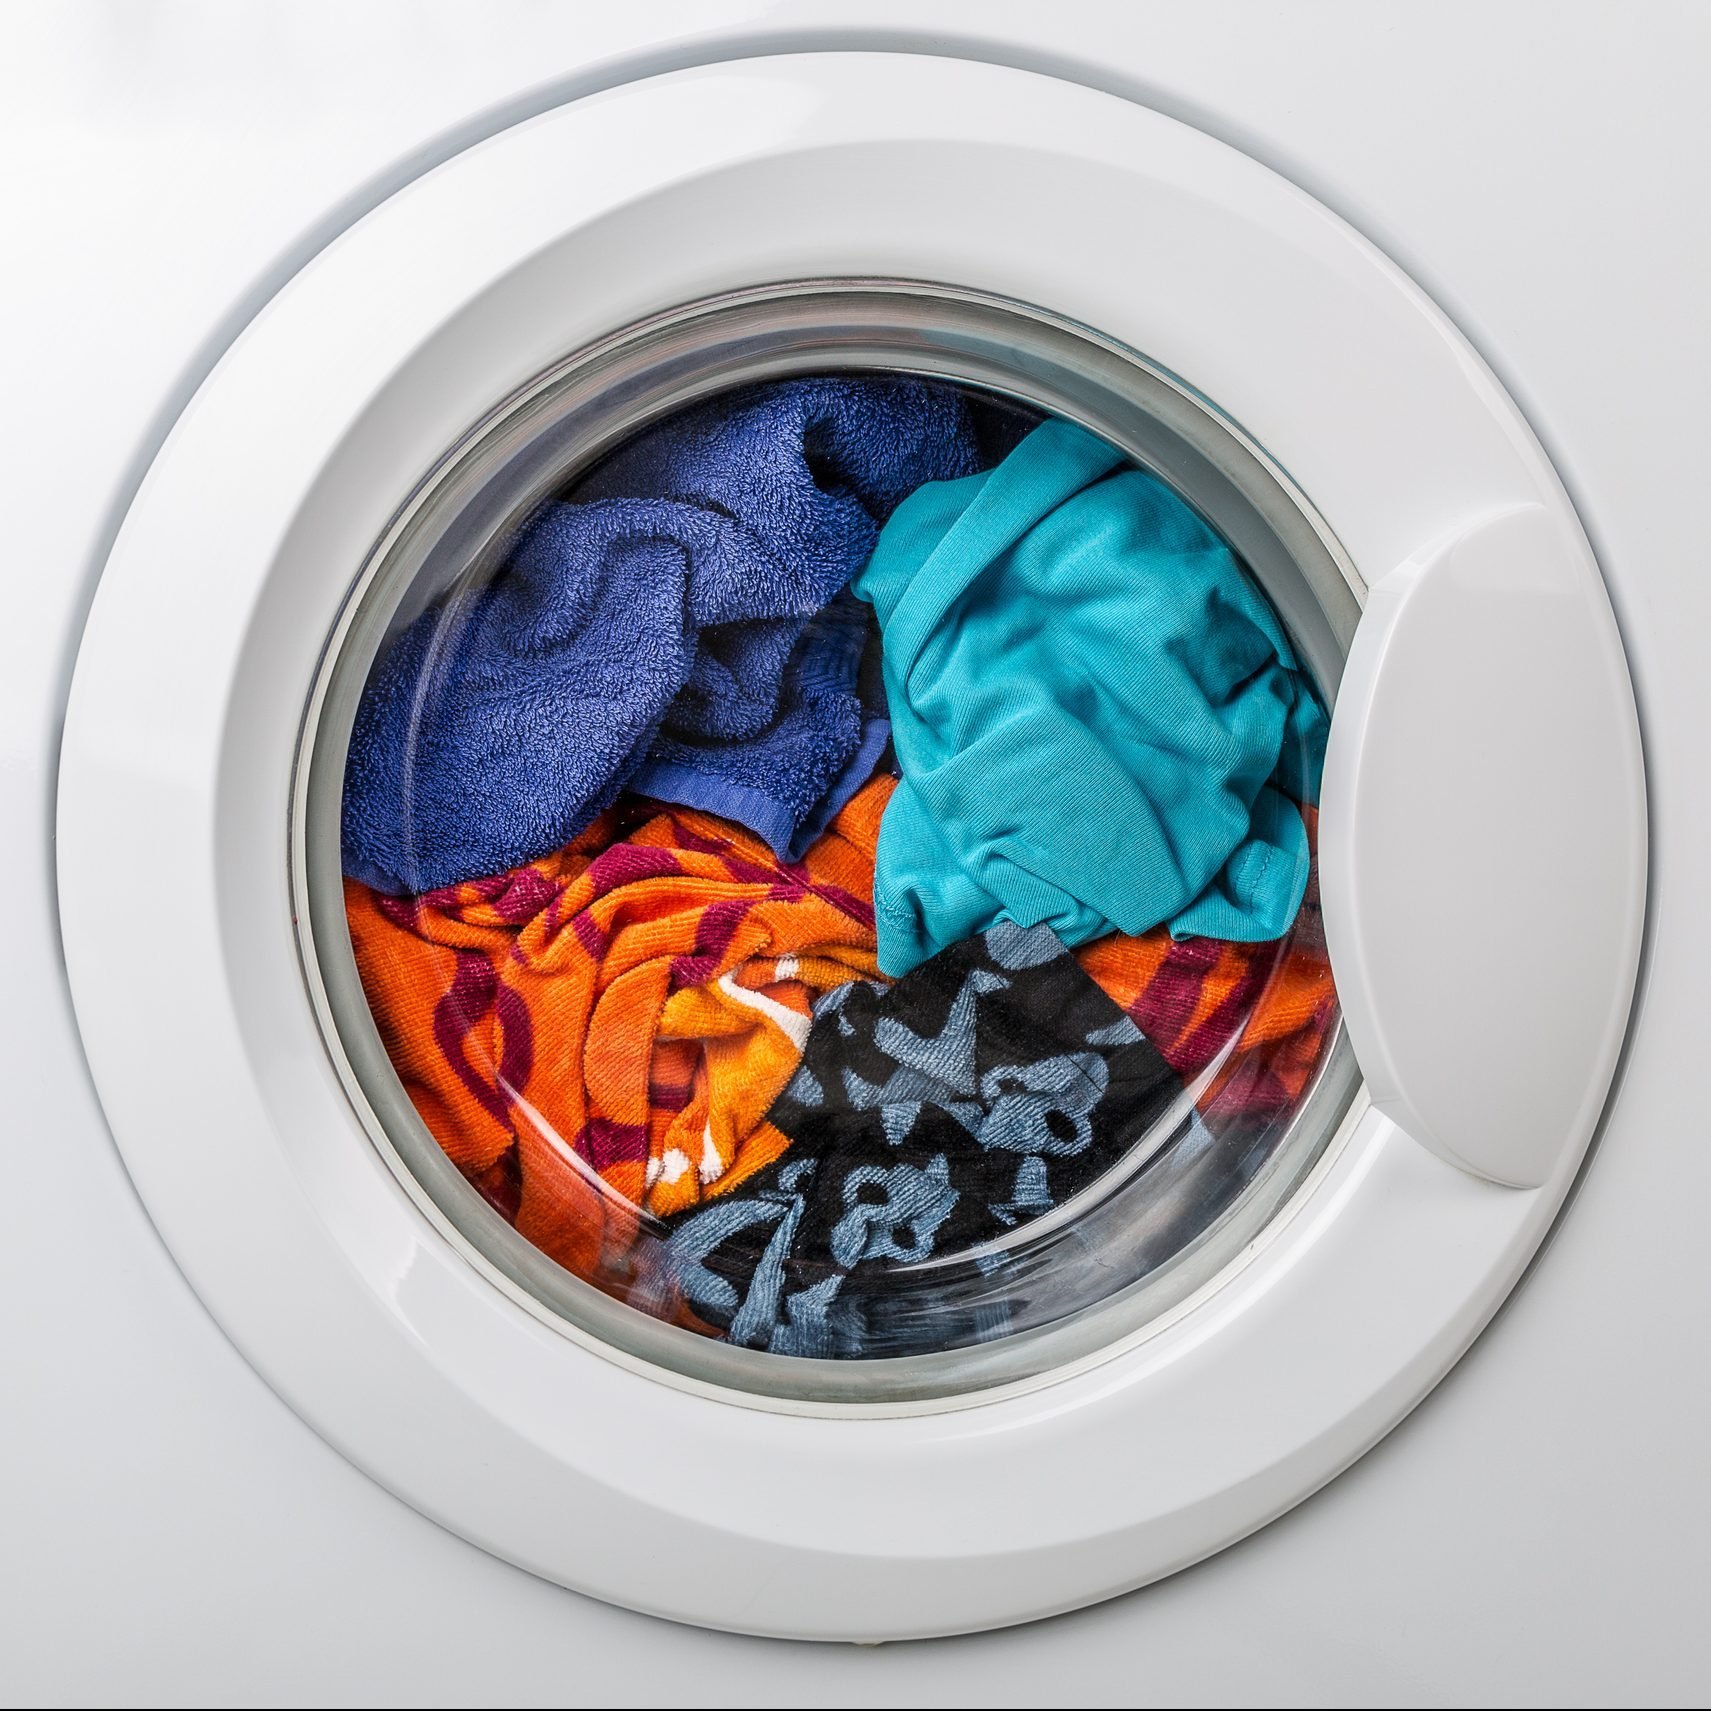 tubbing define as laundering washing